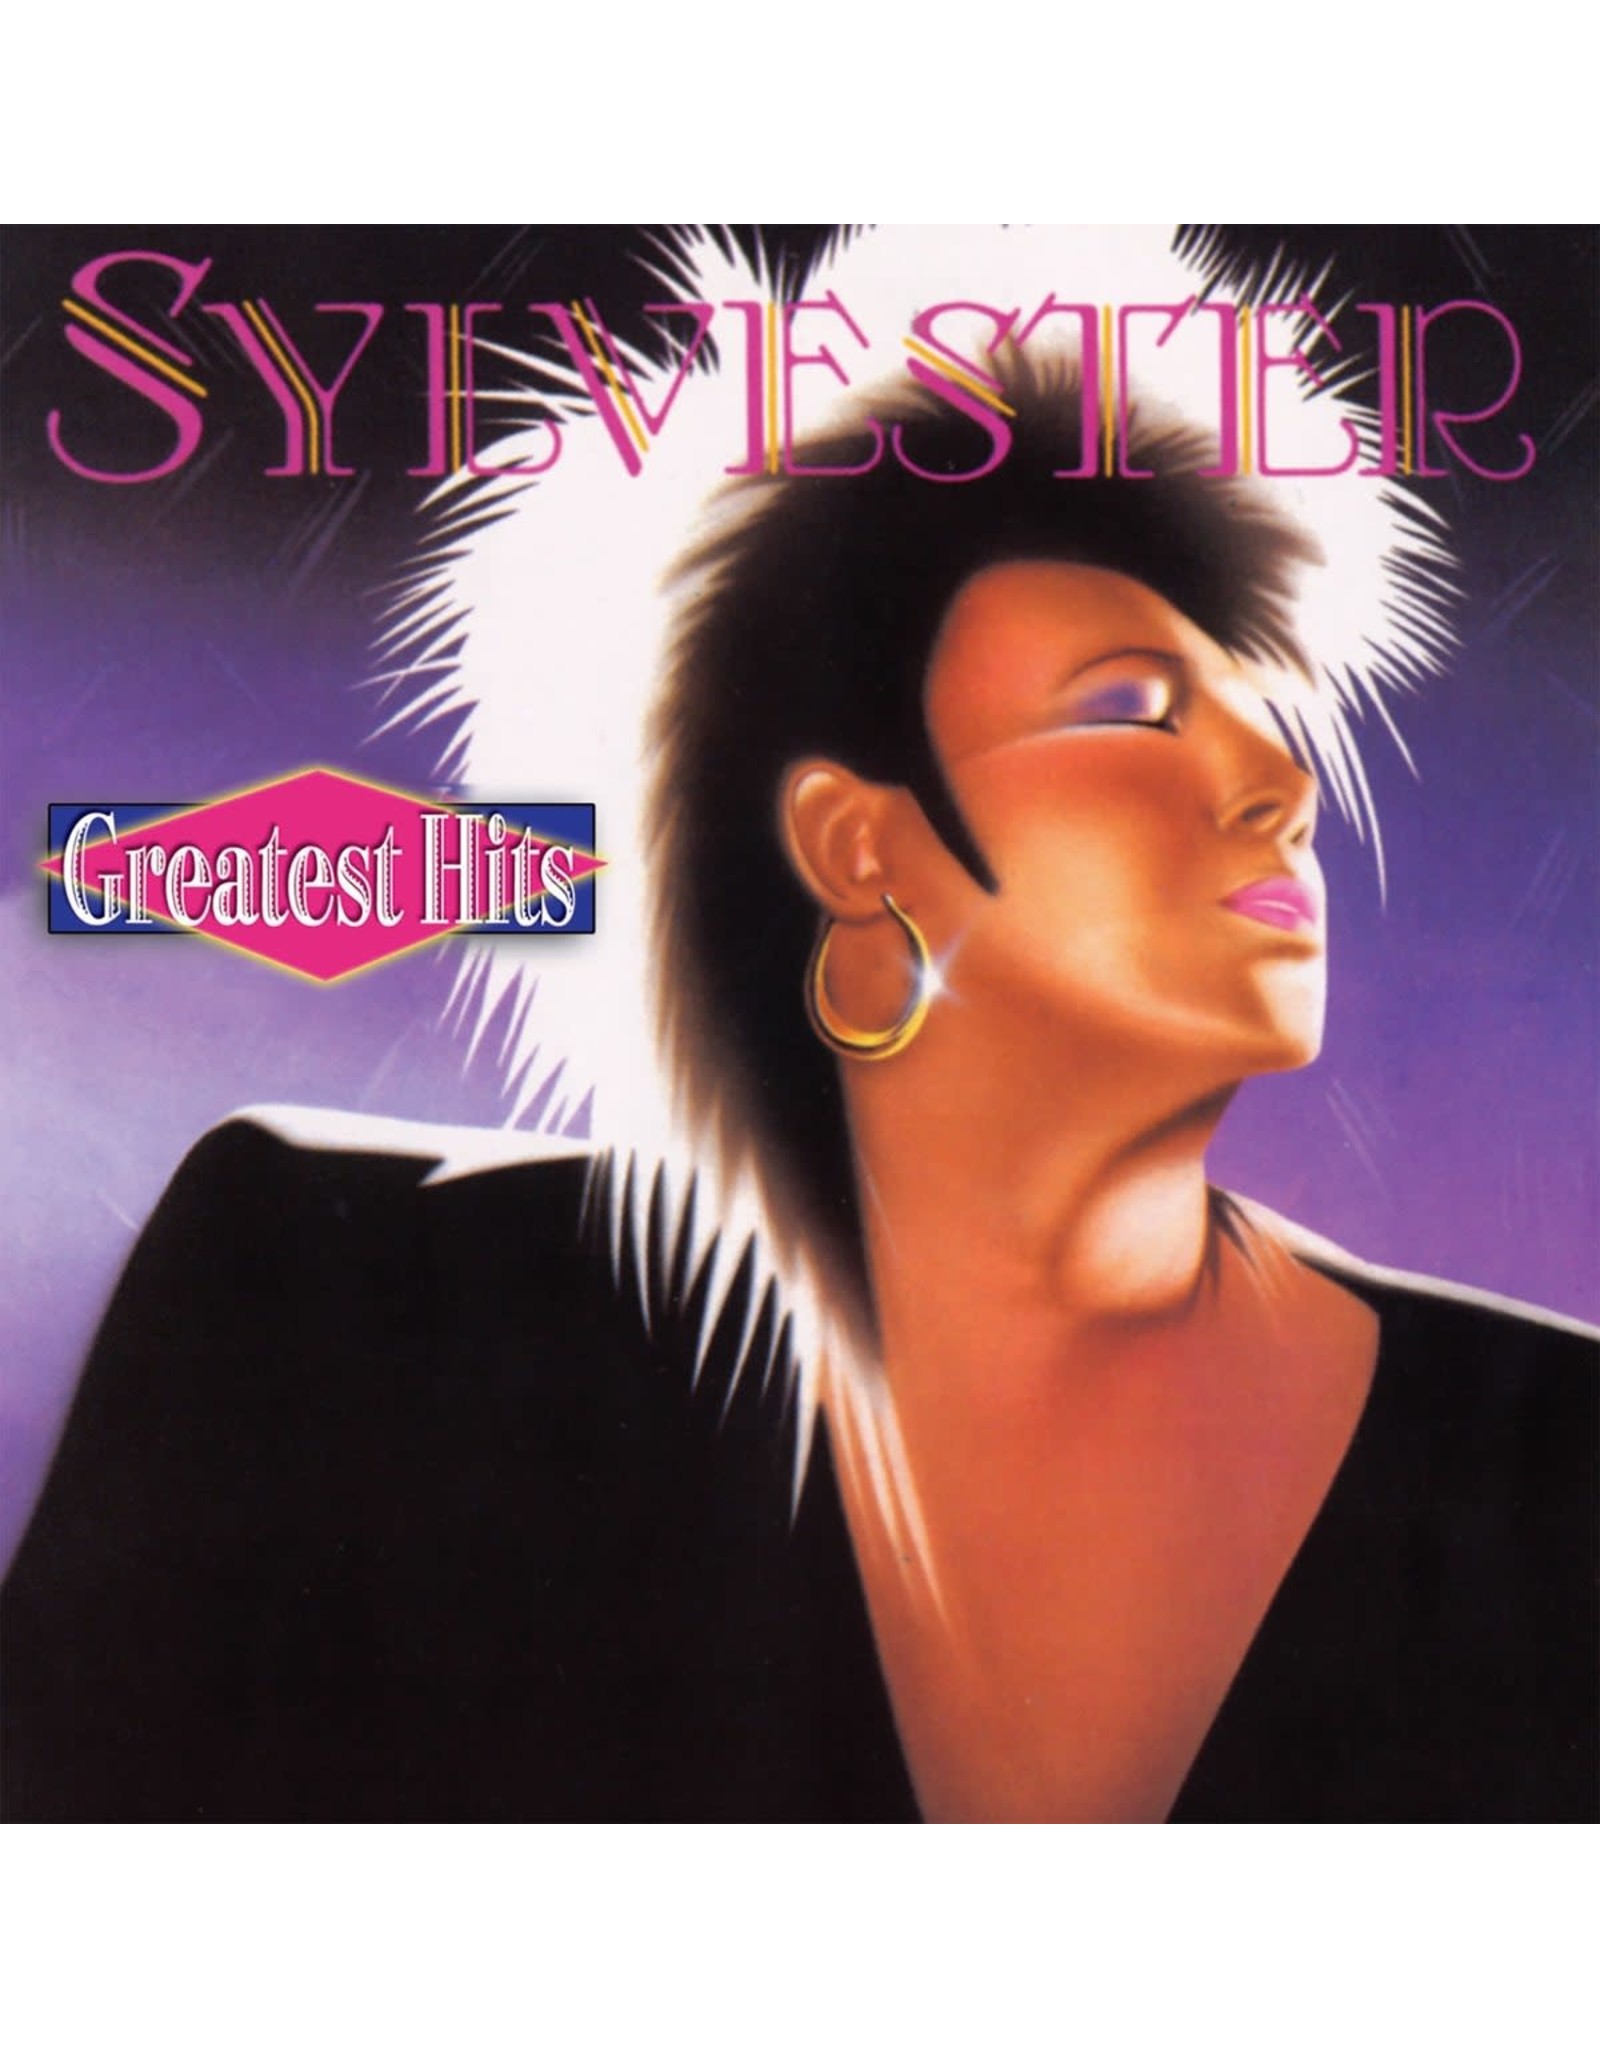 Sylvester - Greatest Hits (Pink & Purple Swirl Vinyl)